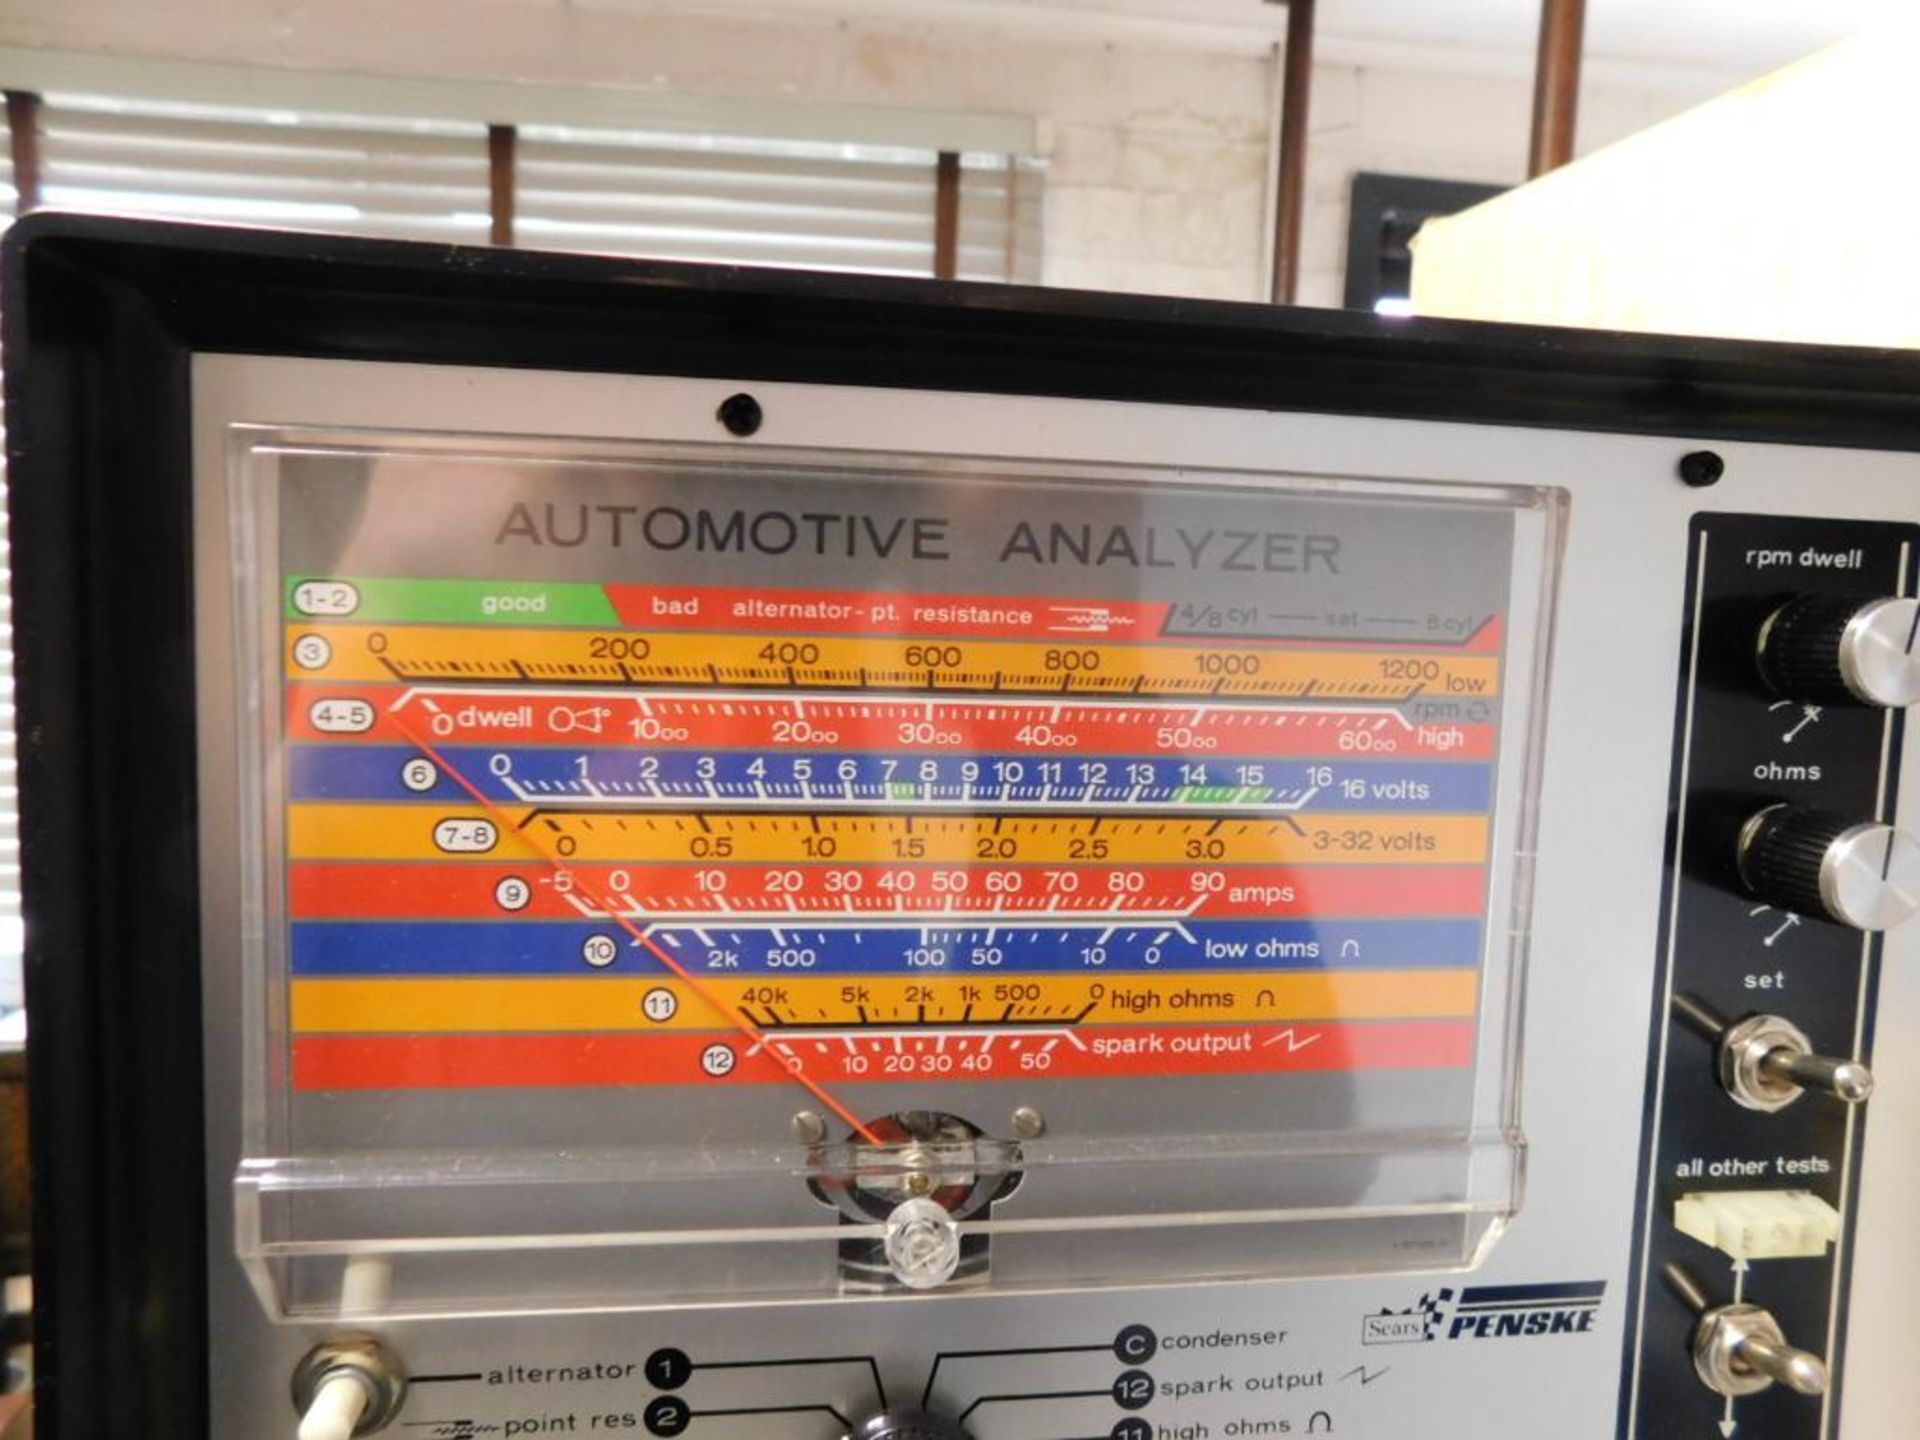 Sears Penske Automotive Analyzer - Image 3 of 5